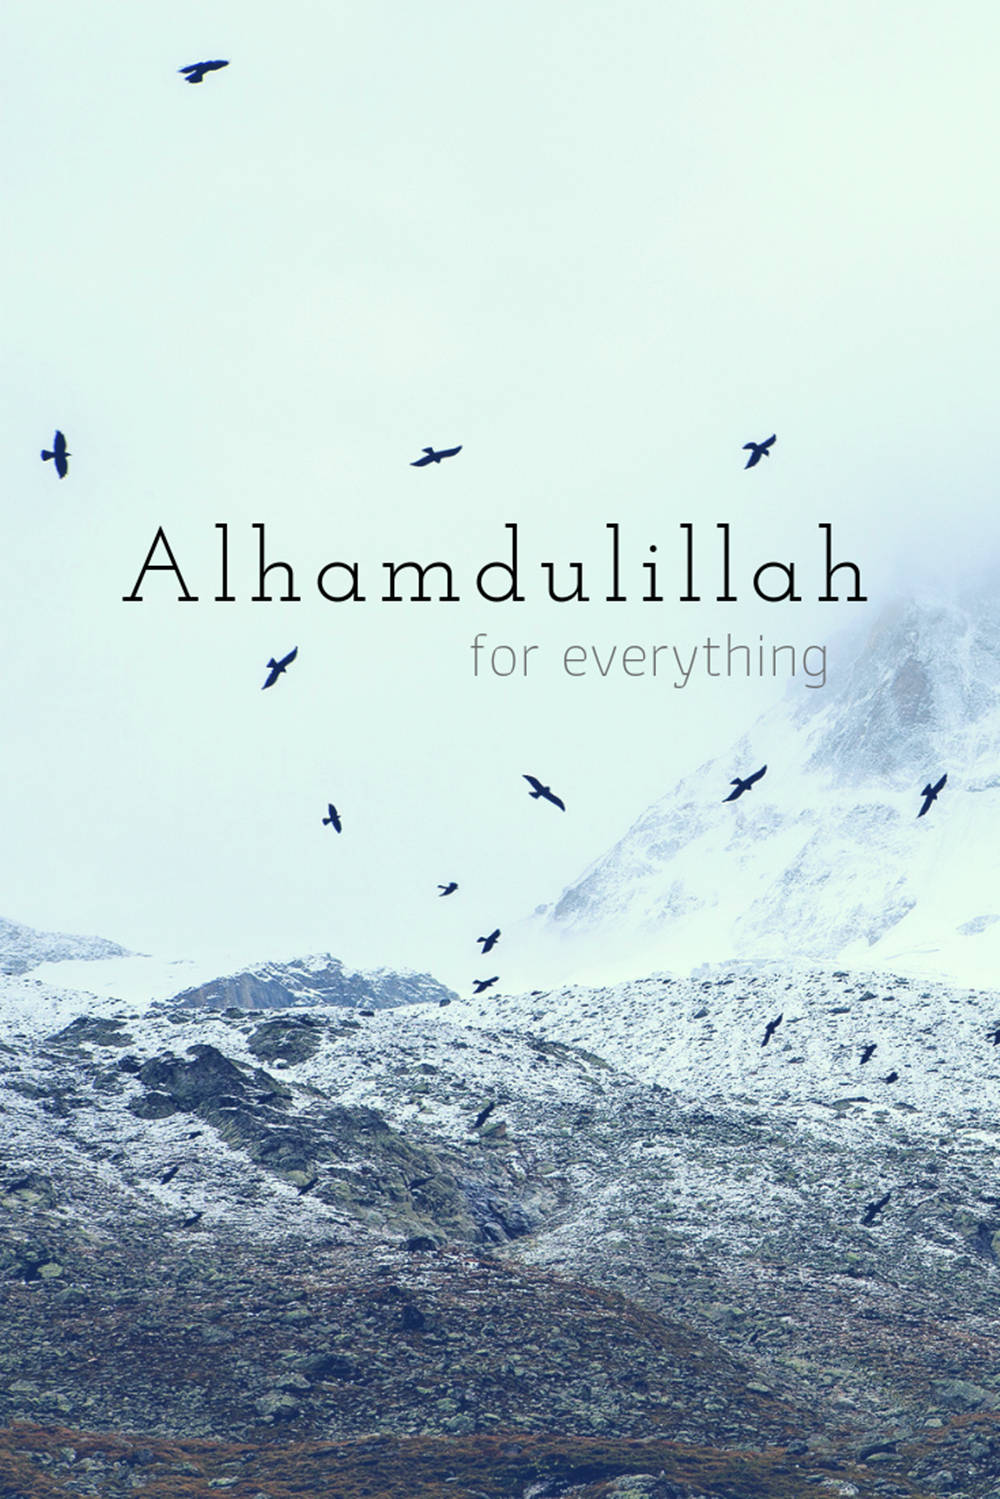 Alhamdulillah Birds And Mountains Wallpaper